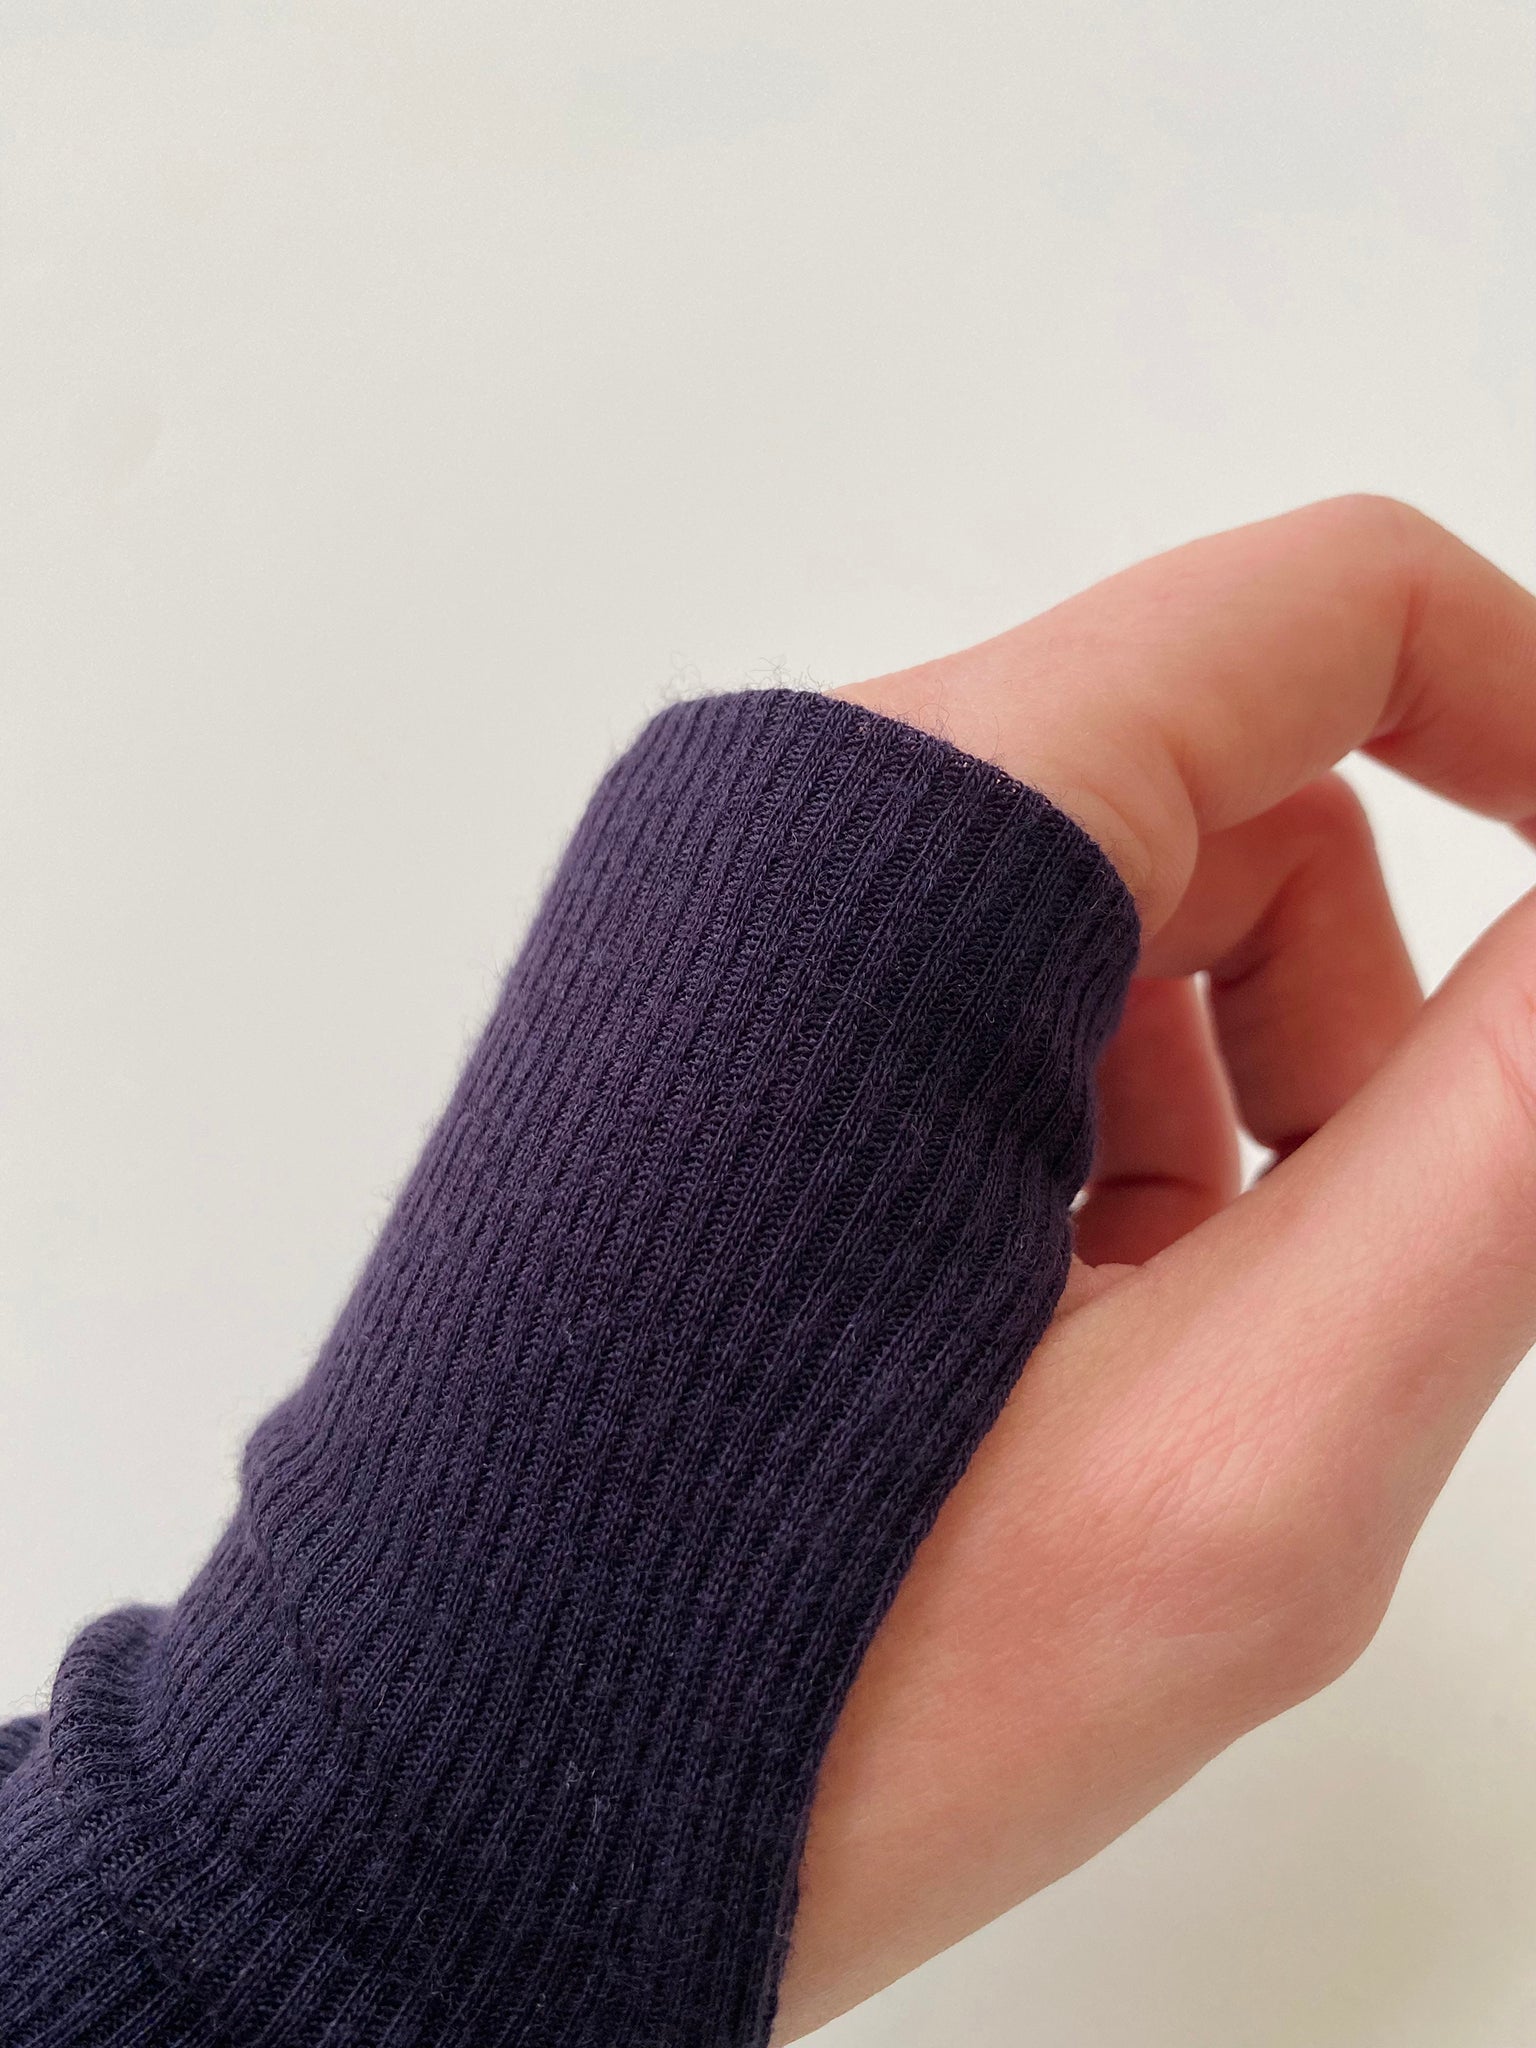 A.49 Aubergine Merino Wool Hand Warmers